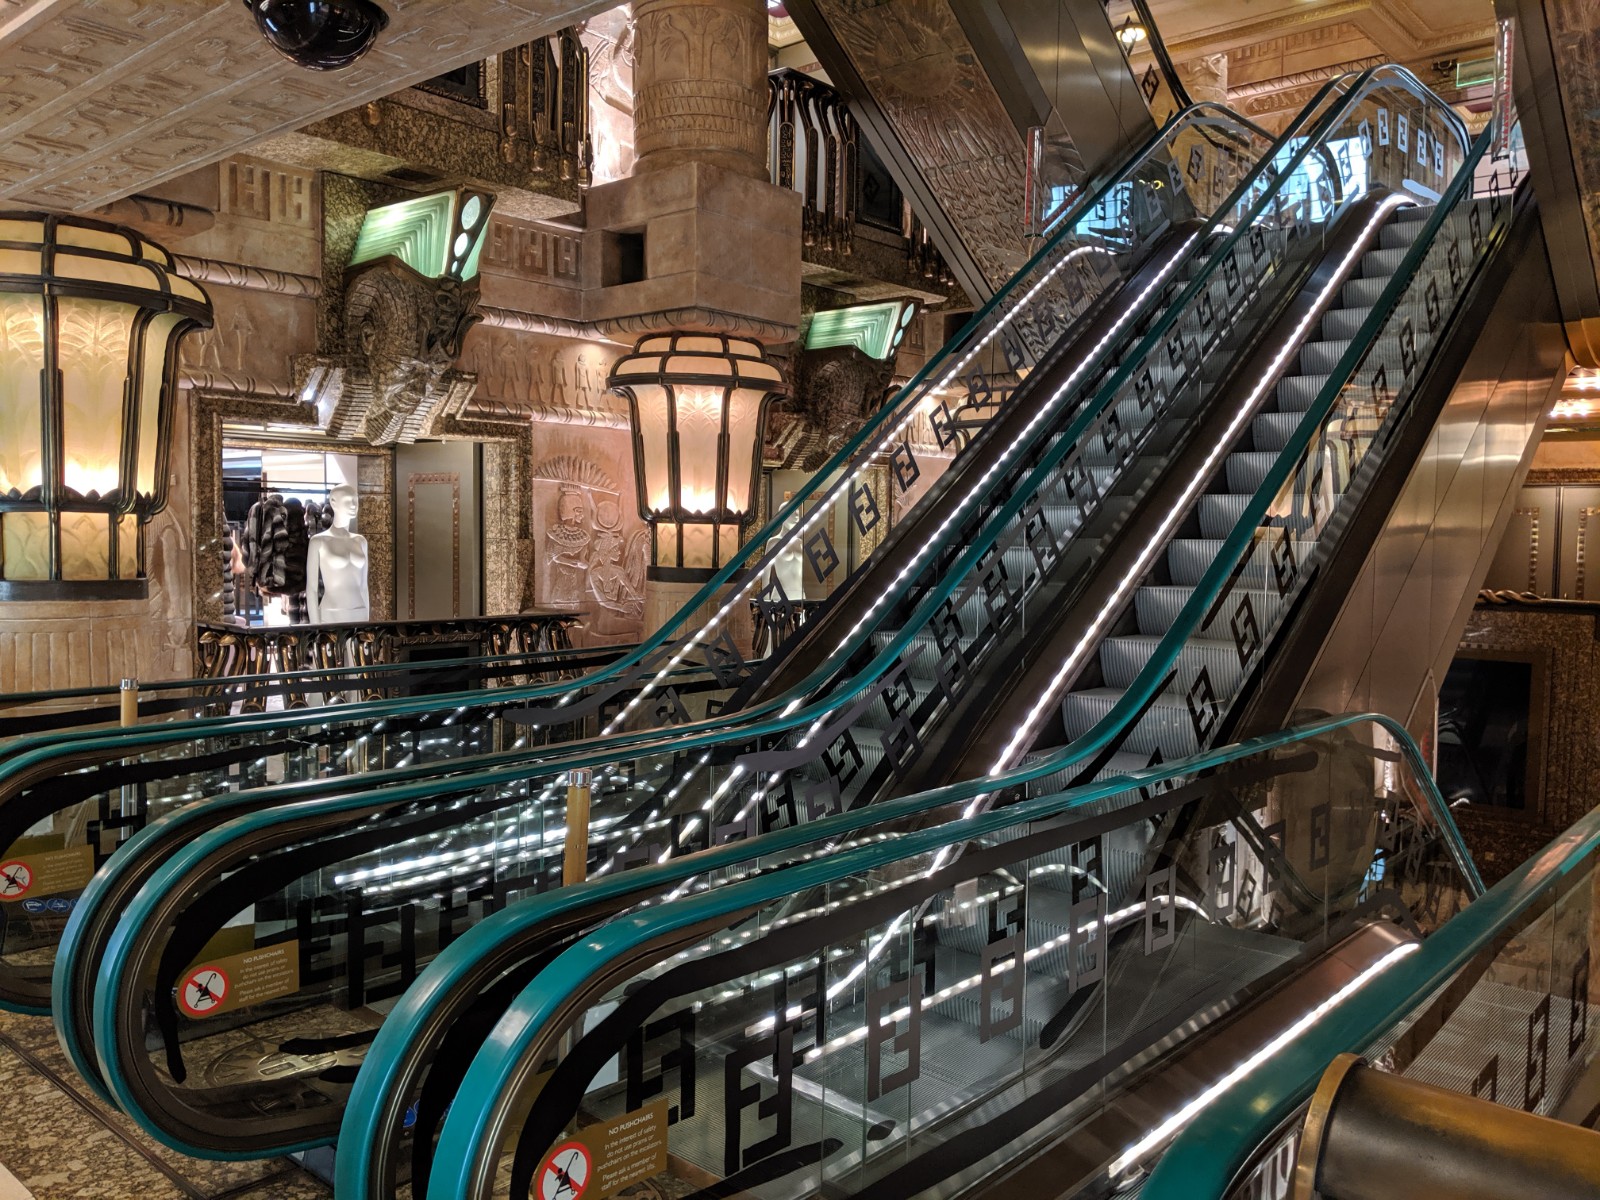 Fendi escalators in Harrods, London